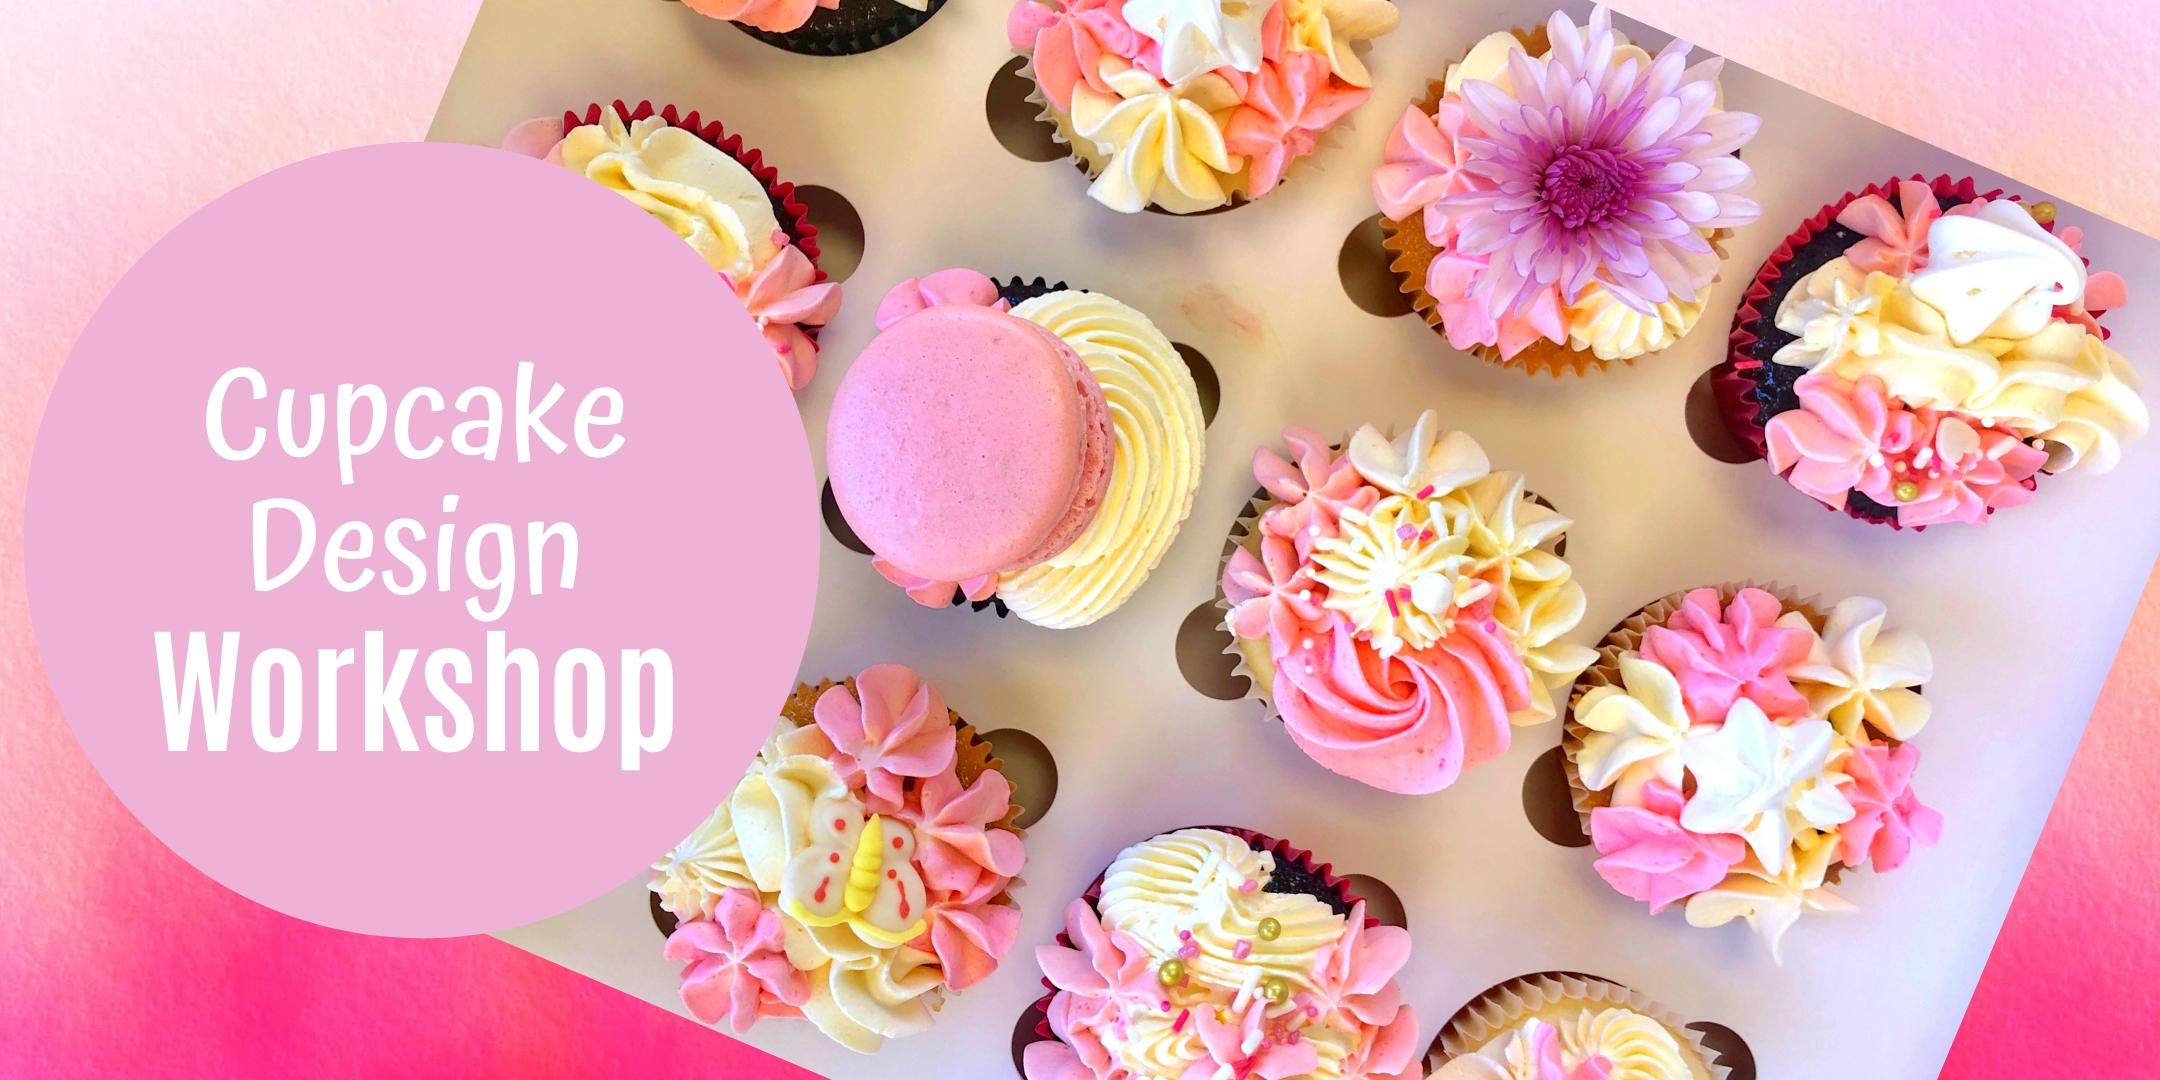 Cupcake Design Workshop